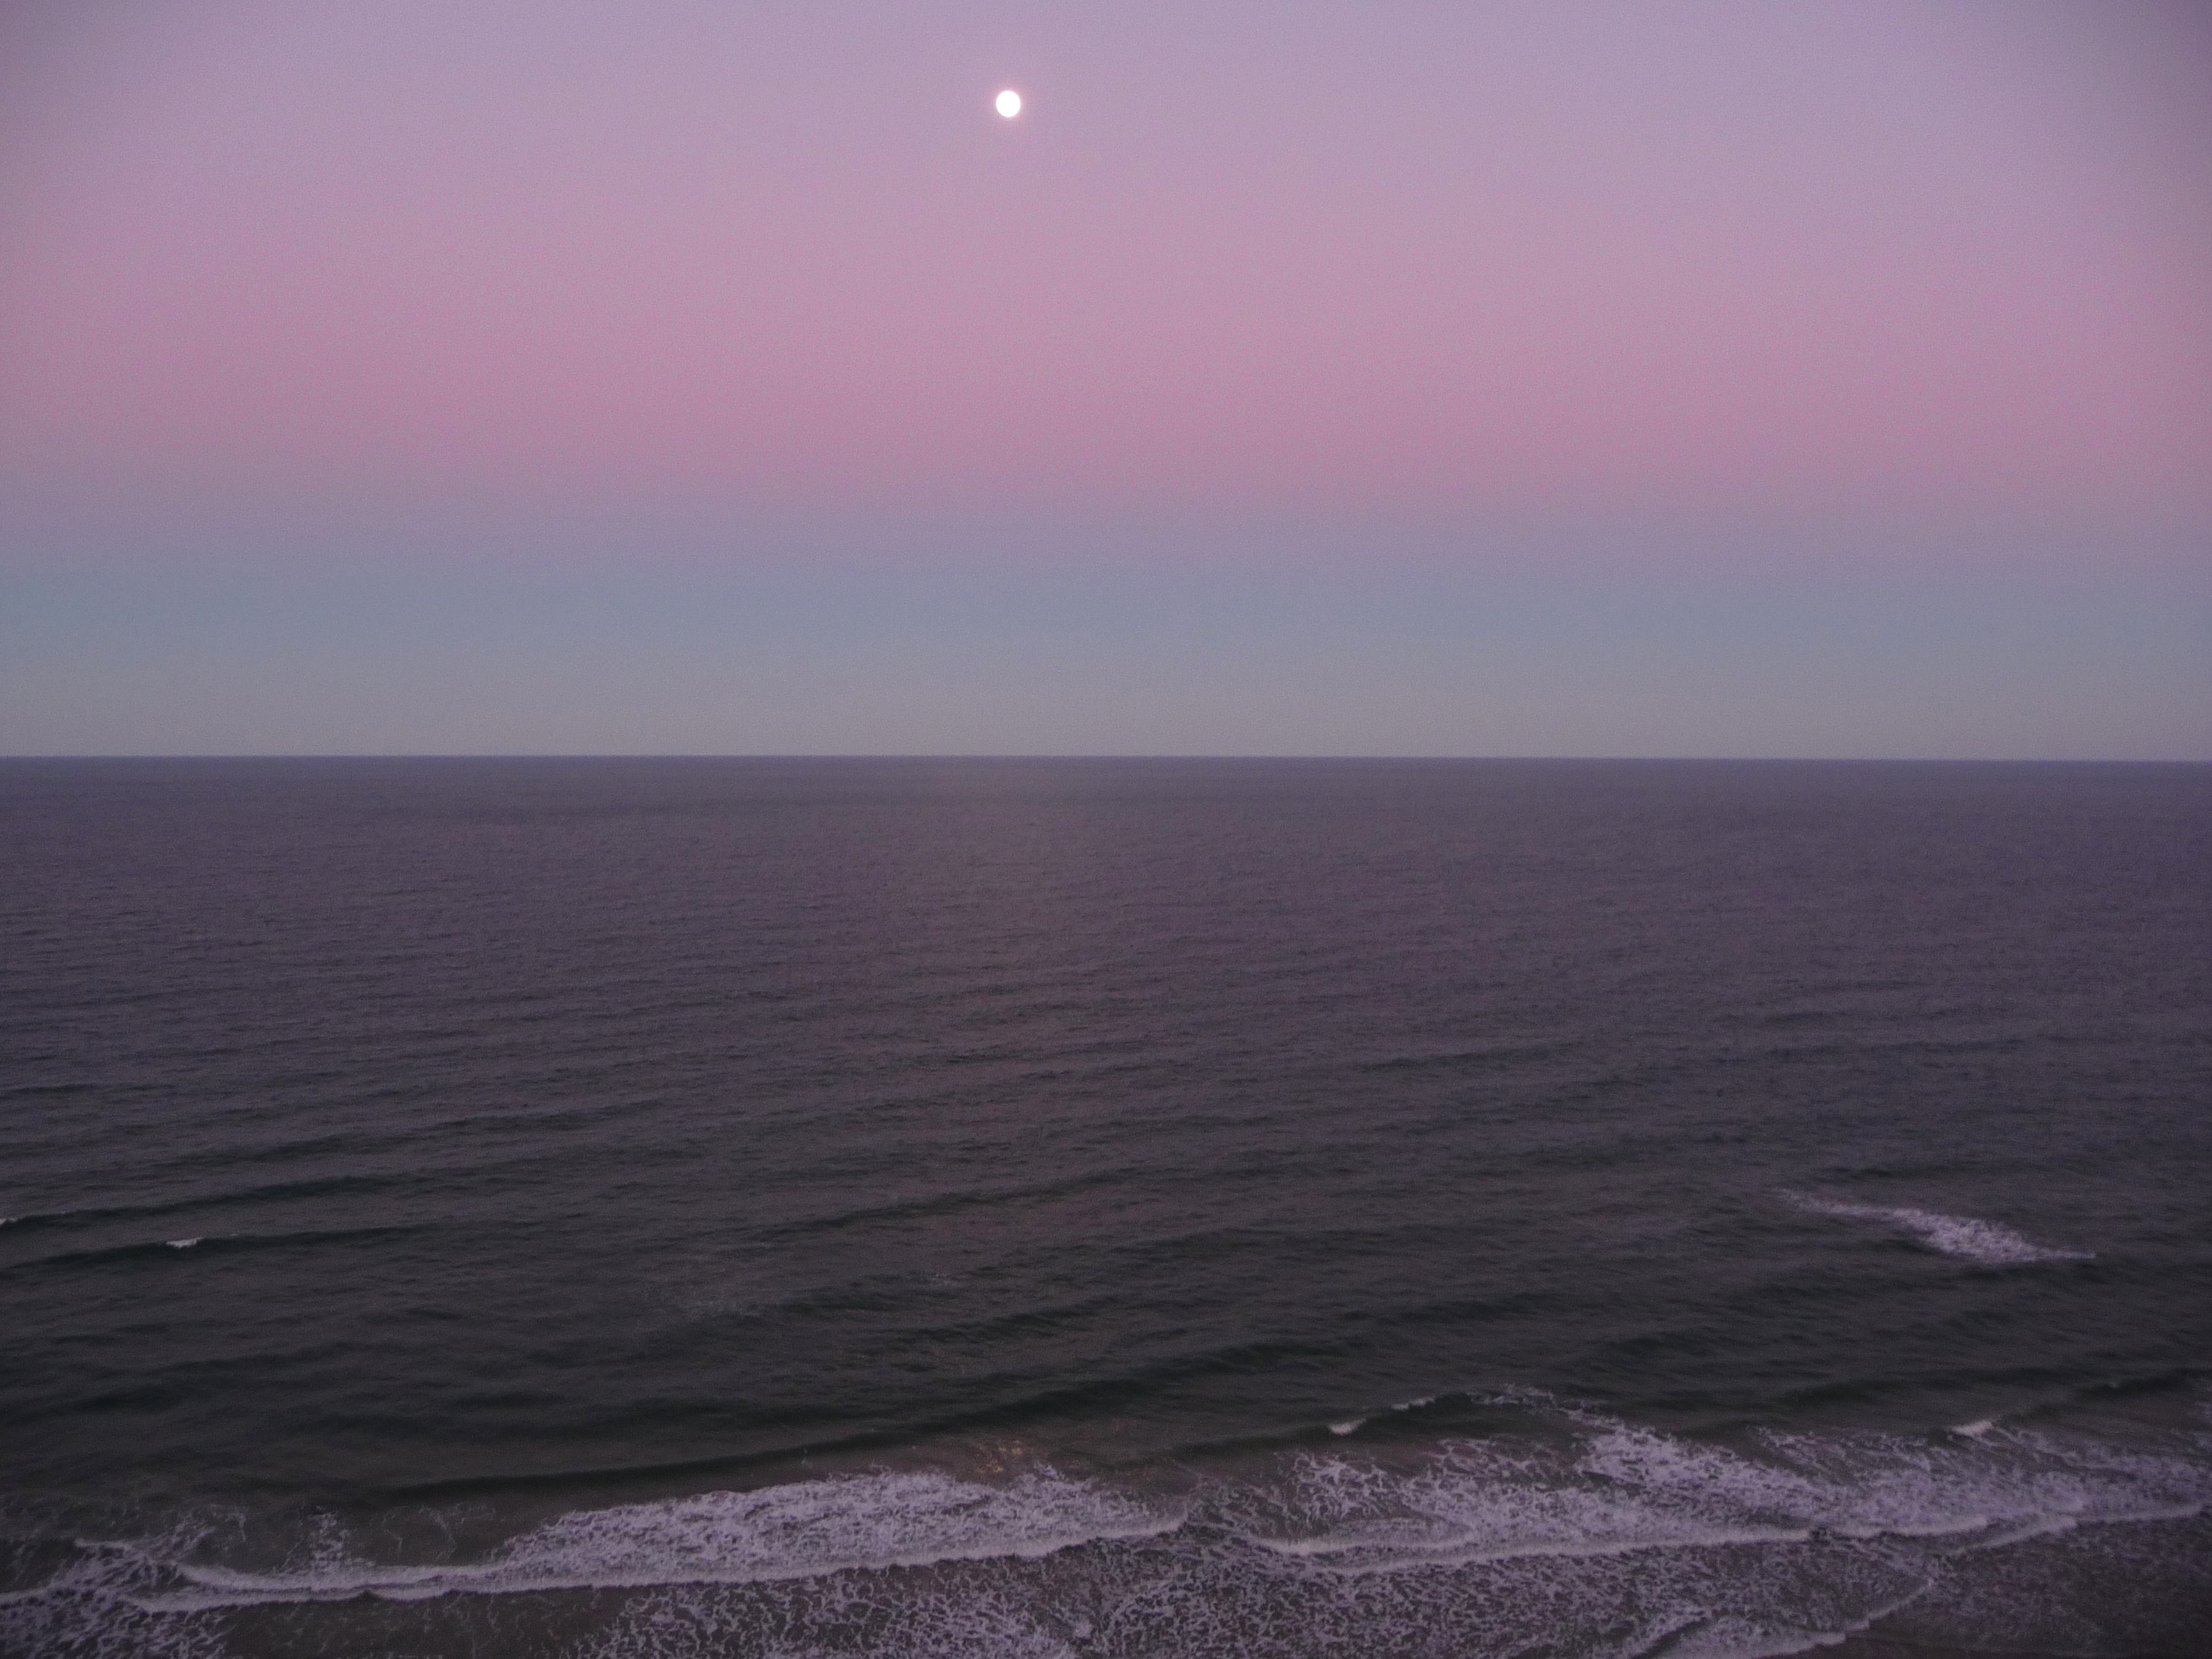 Moonrise over the Atlantic Ocean